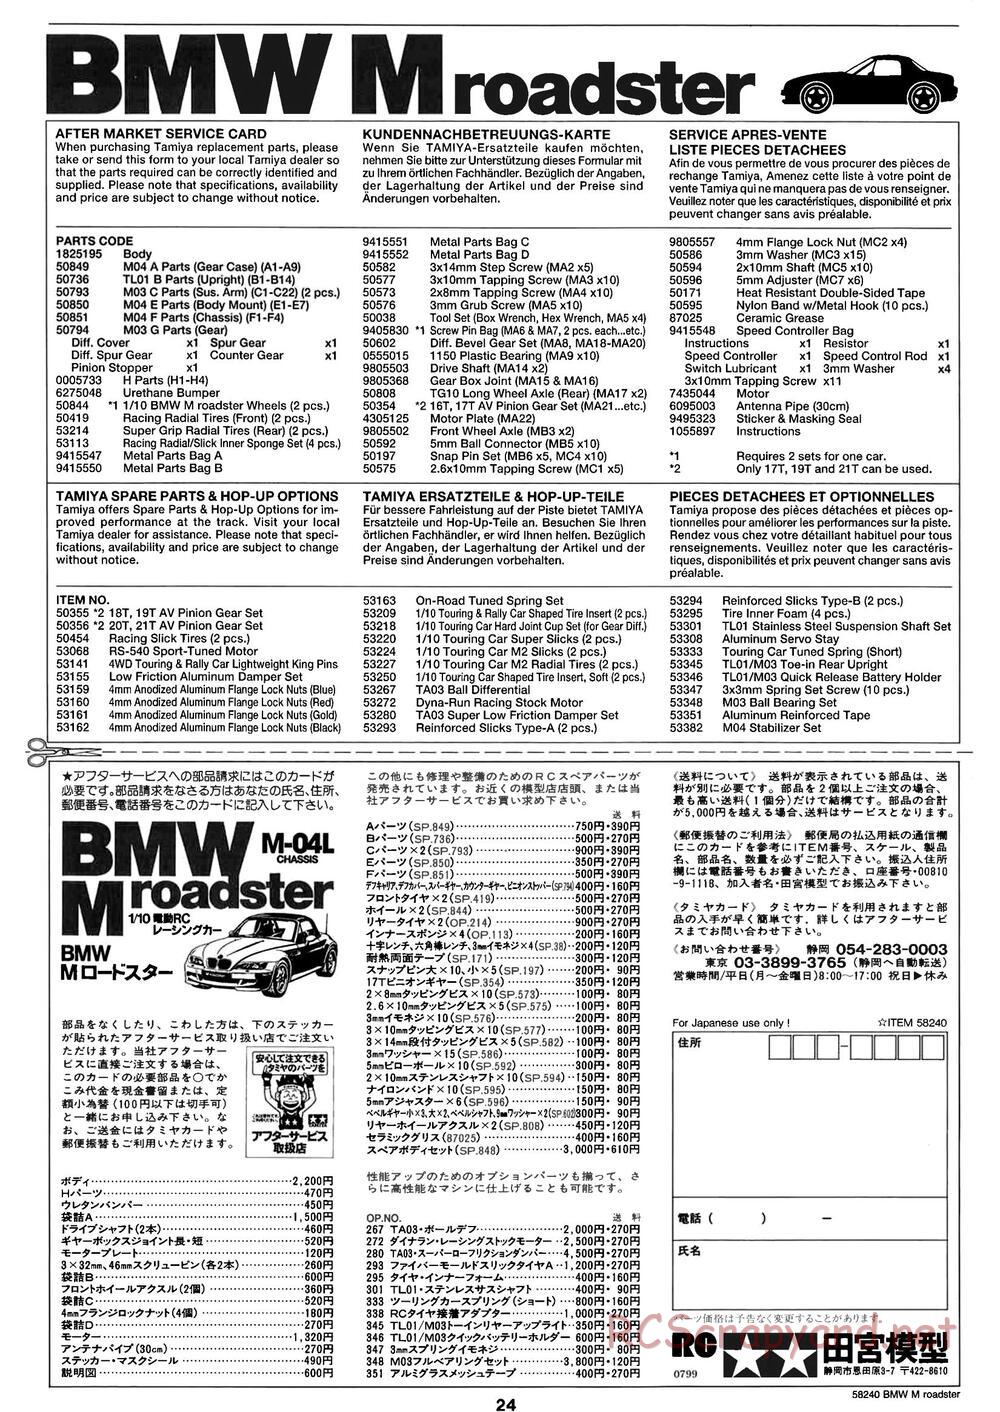 Tamiya - BMW M Roadster - M04L Chassis - Manual - Page 24